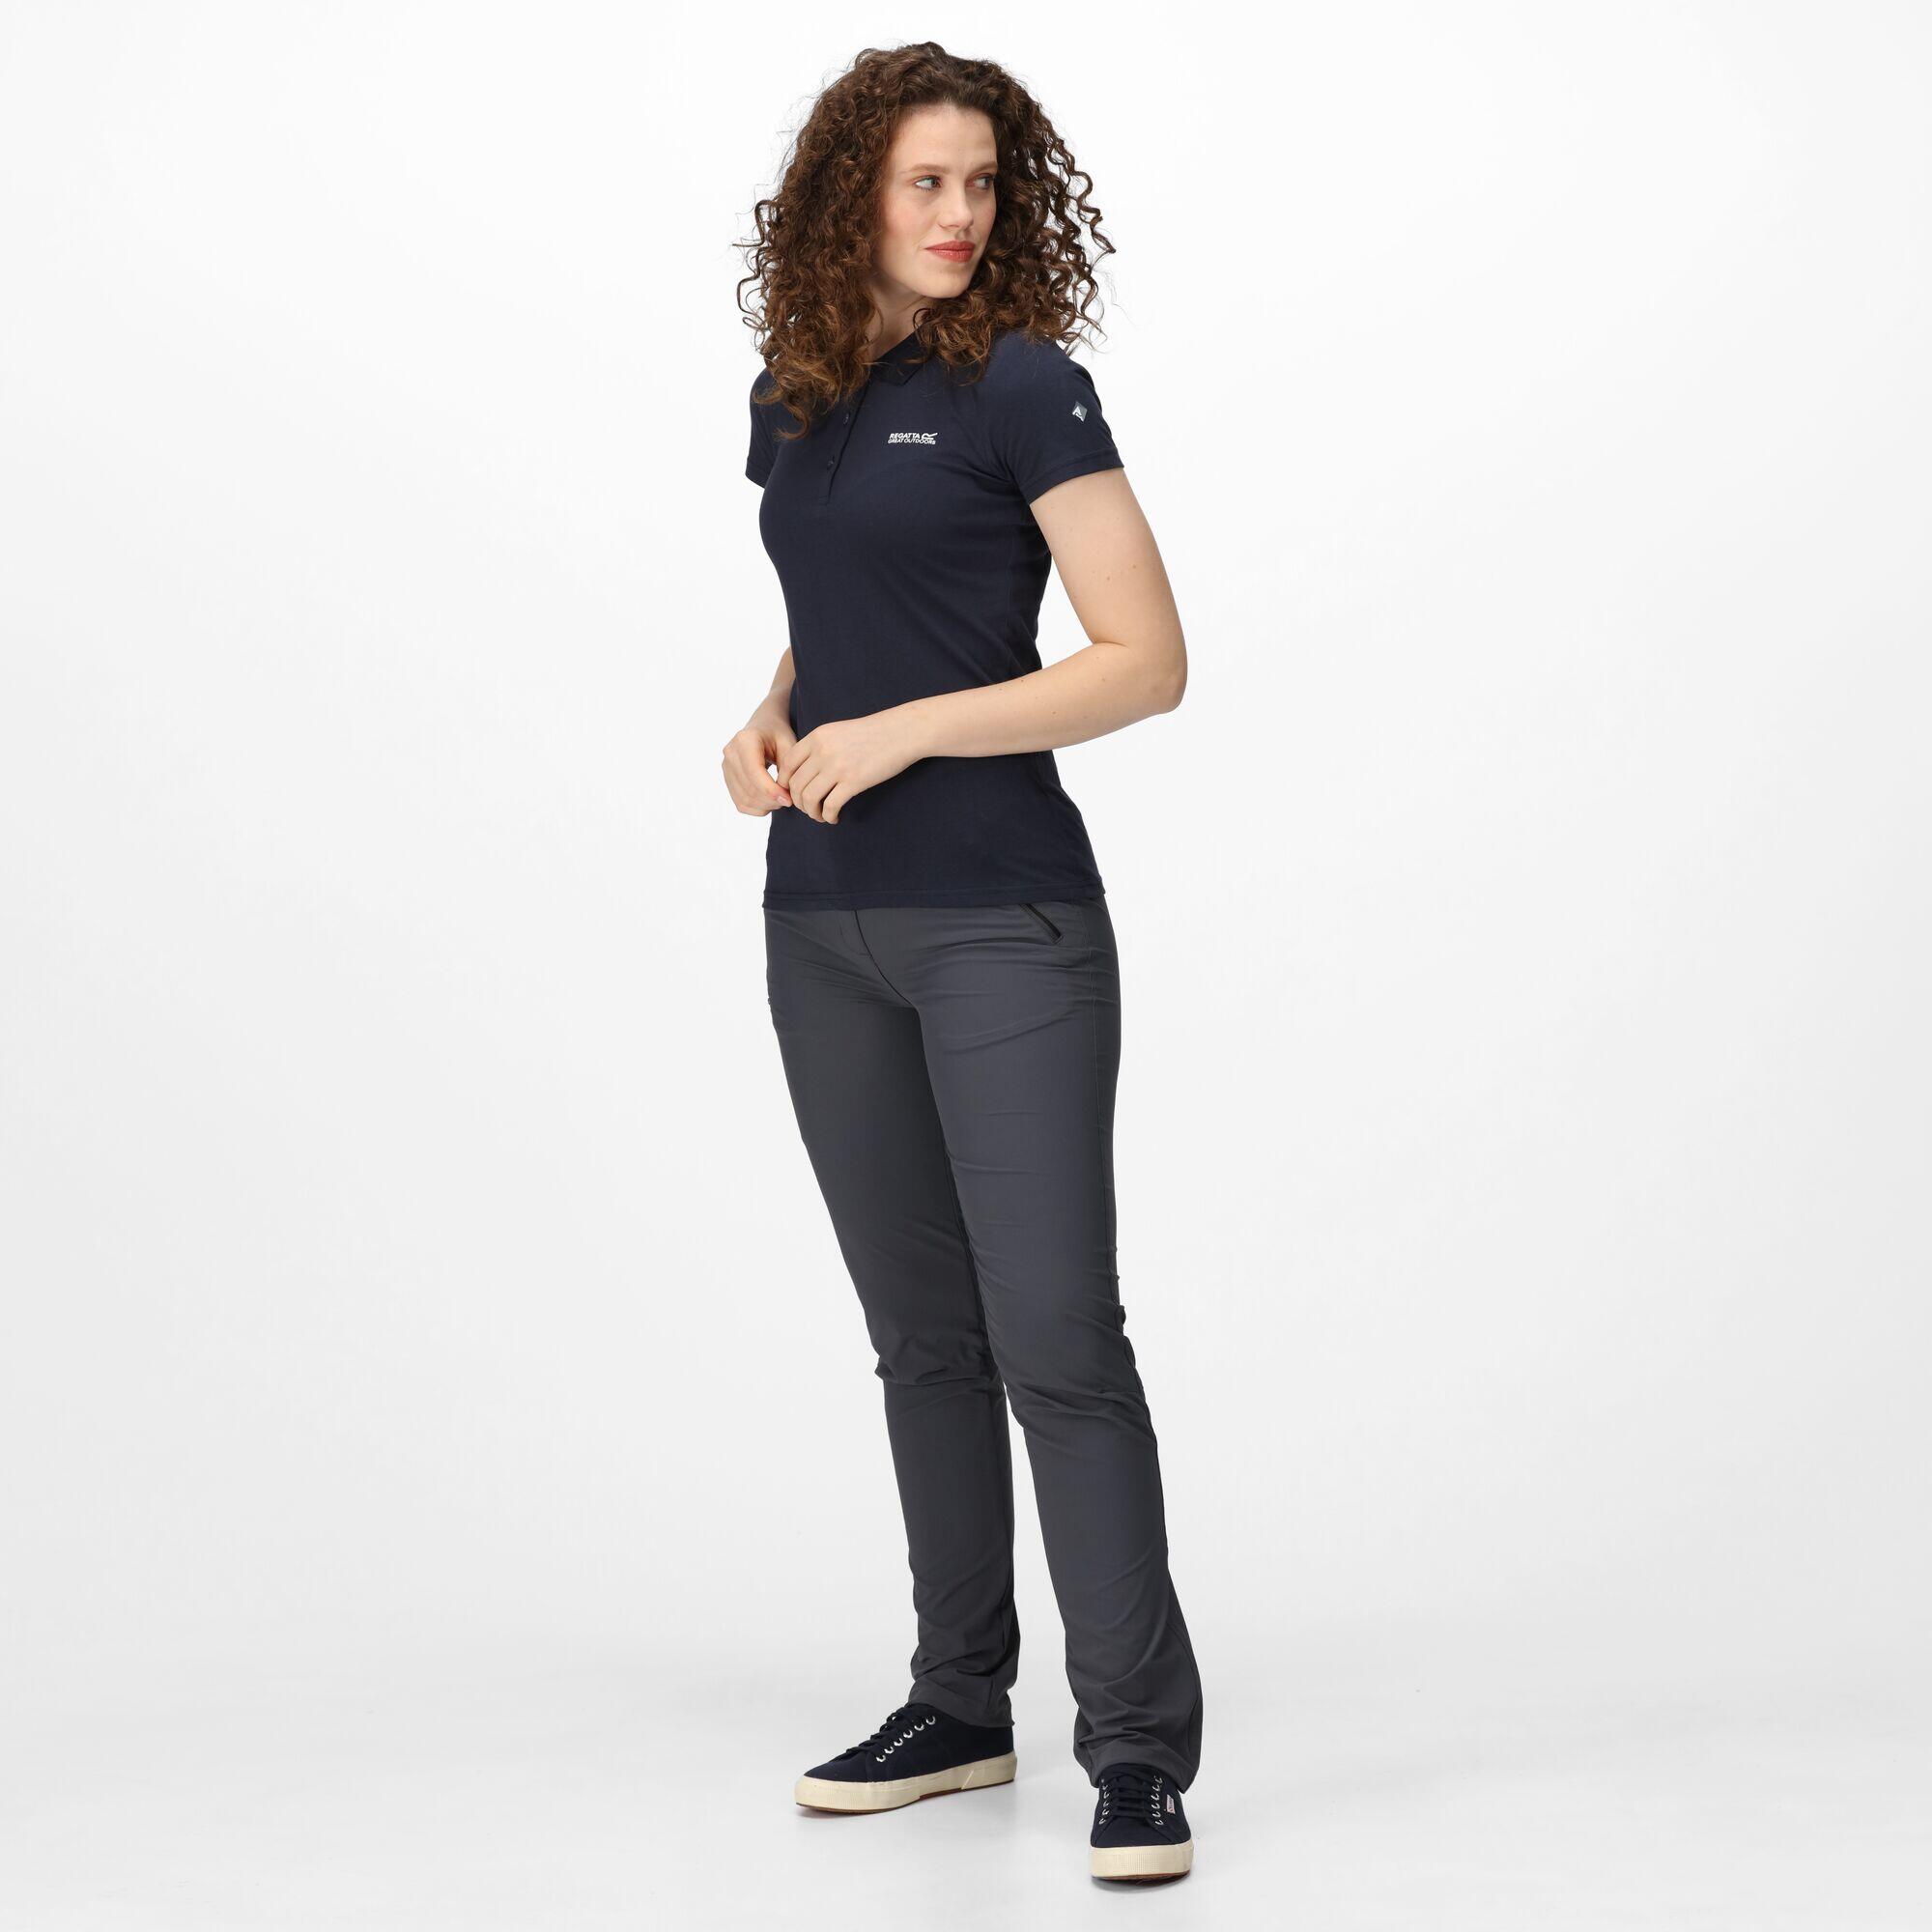 Sinton Women's Fitness Short Sleeve T-Shirt - Navy 3/5